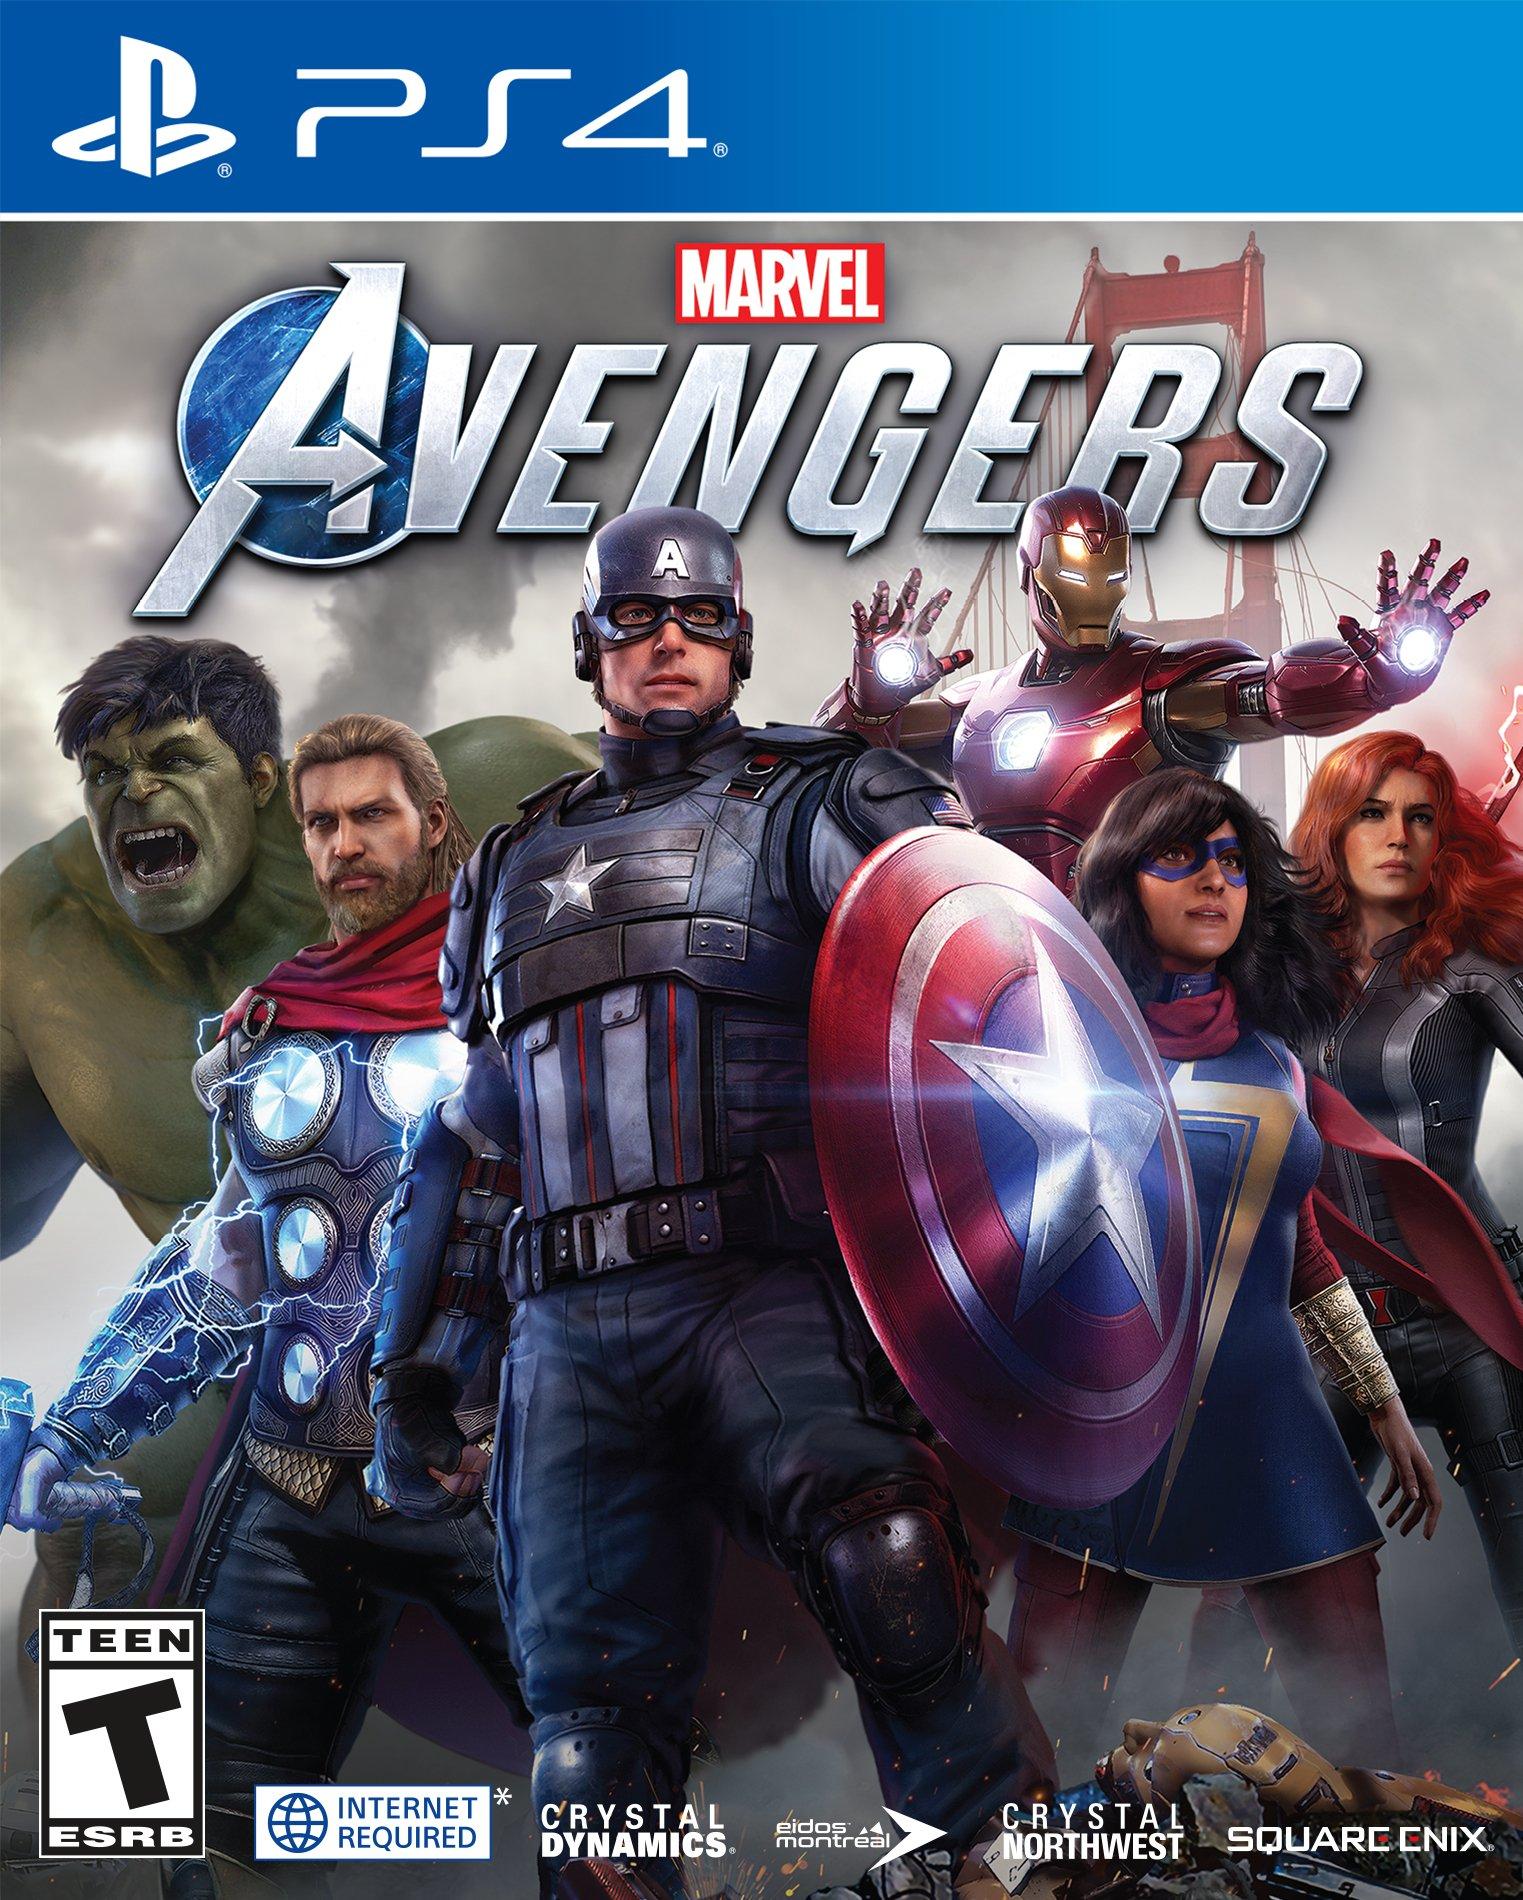 Aktuator fængsel Ferie Marvel Avengers Game Pre Order Xbox One Flash Sales - learning.esc.edu.ar  1688693731